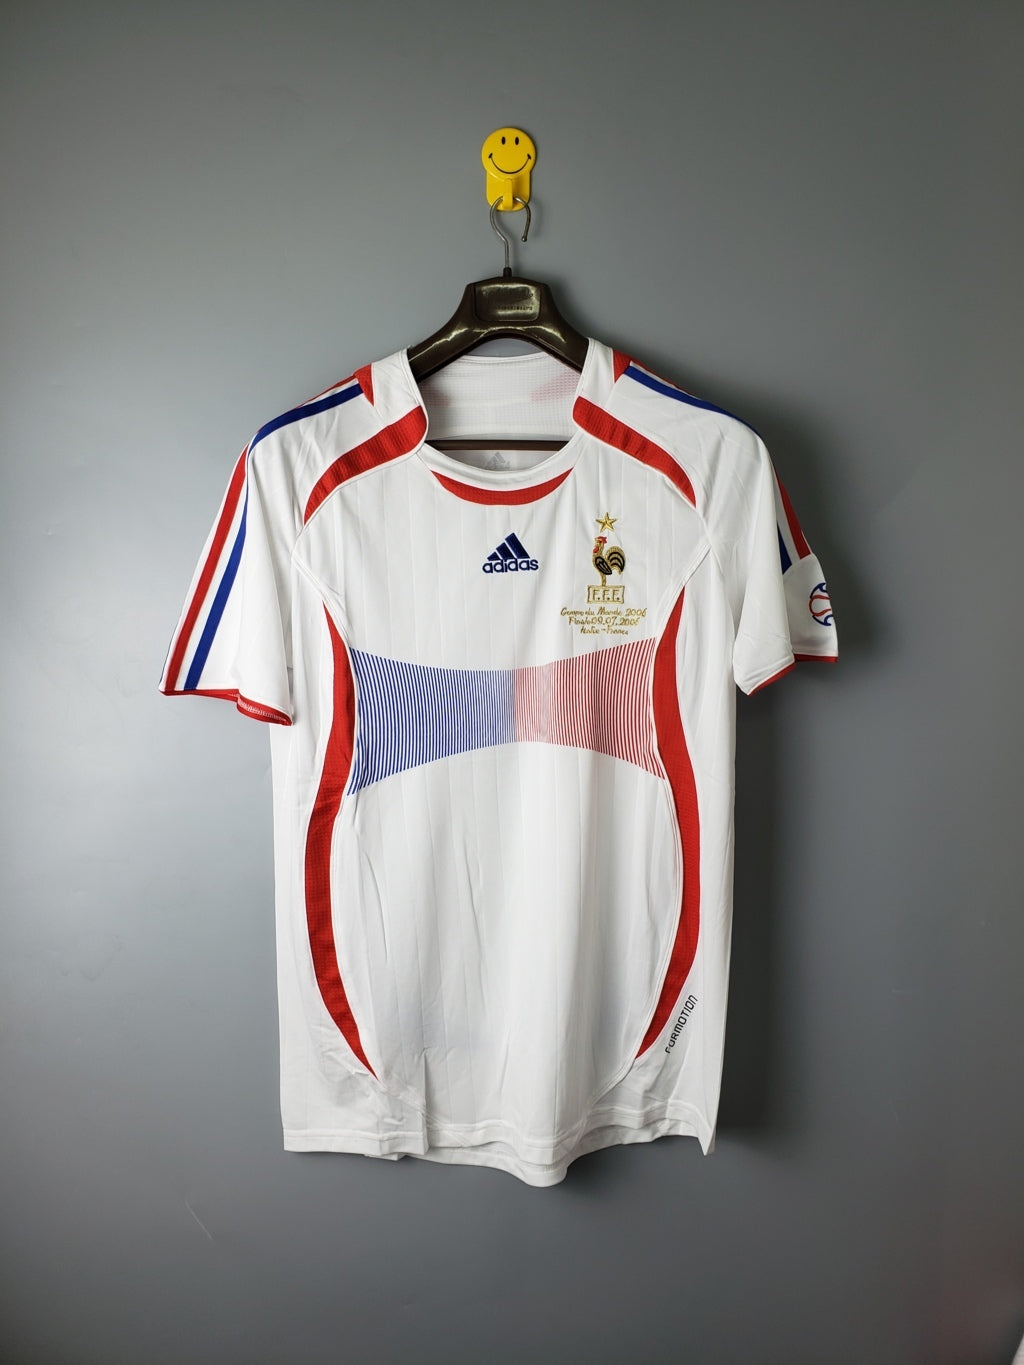 France 2006 - 2007 Home football shirt jersey Adidas size L